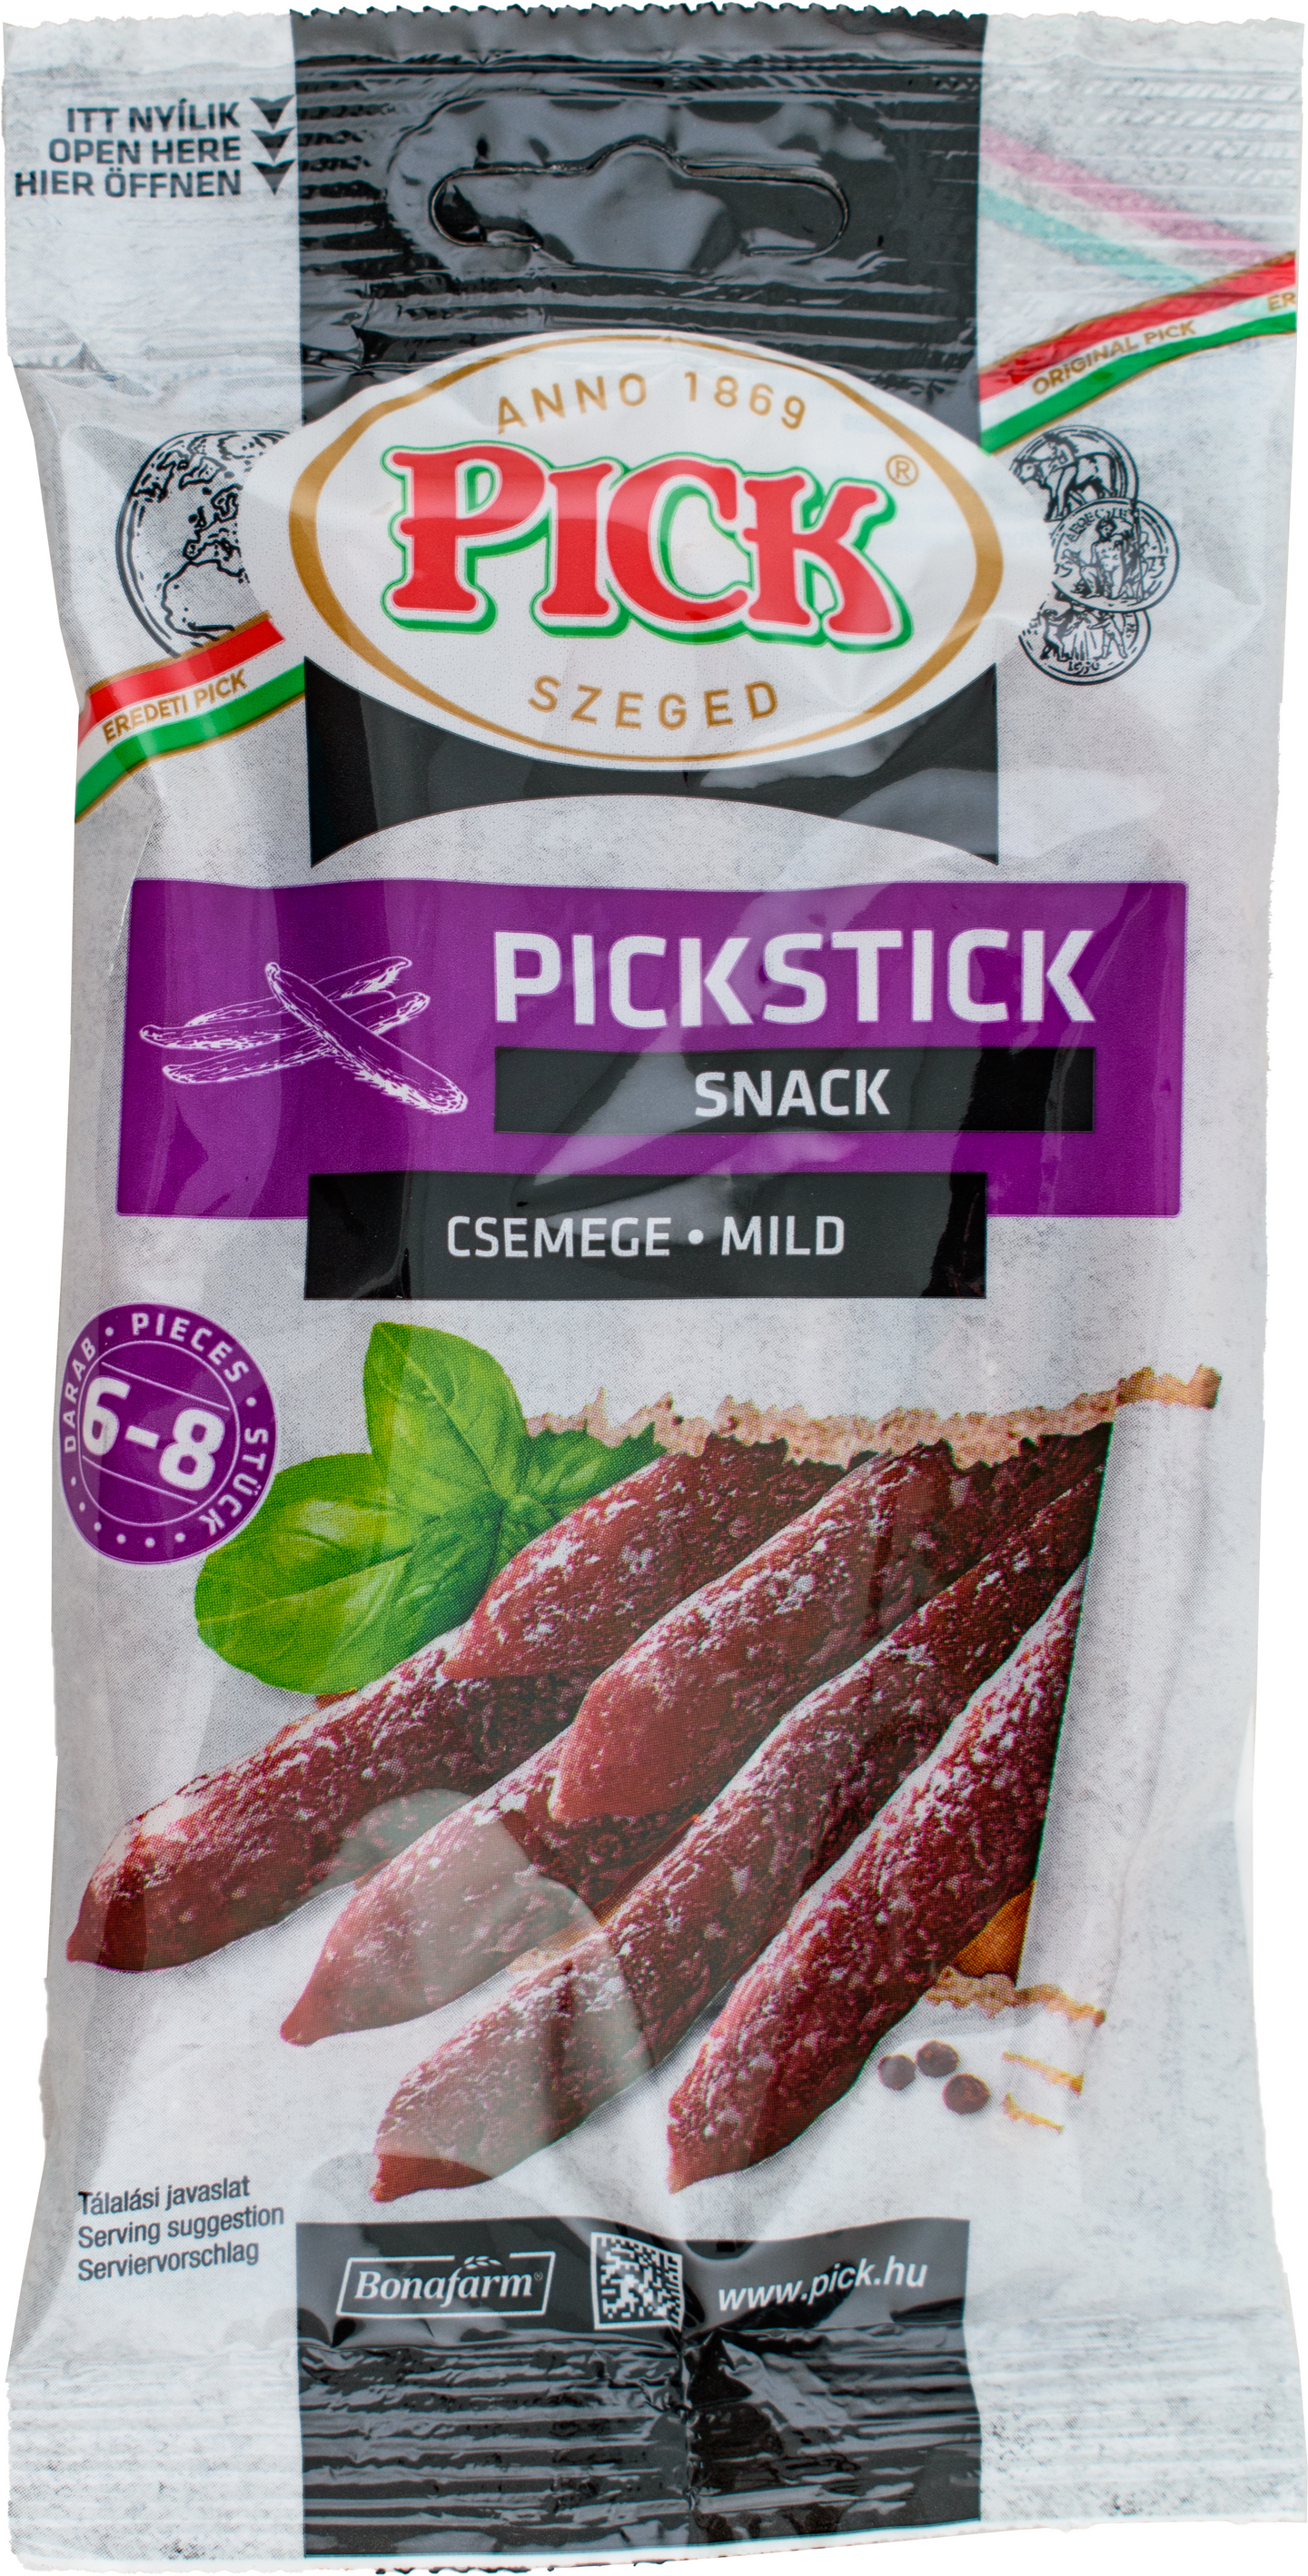 Pickstick mieto salami snack 60g